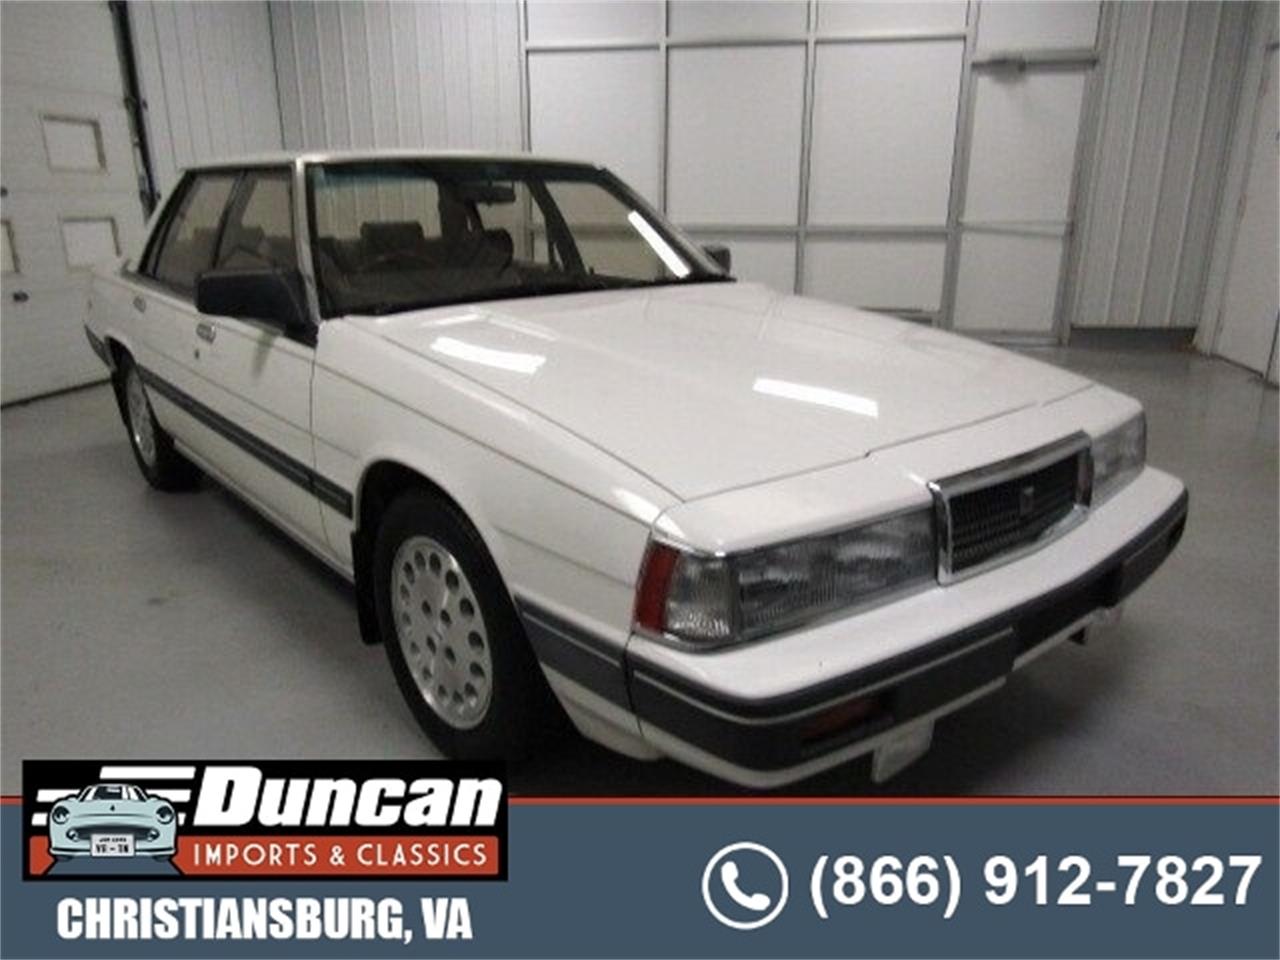 For Sale: 1985 Mazda Cosmo in Christiansburg, Virginia for sale in Christiansburg, VA